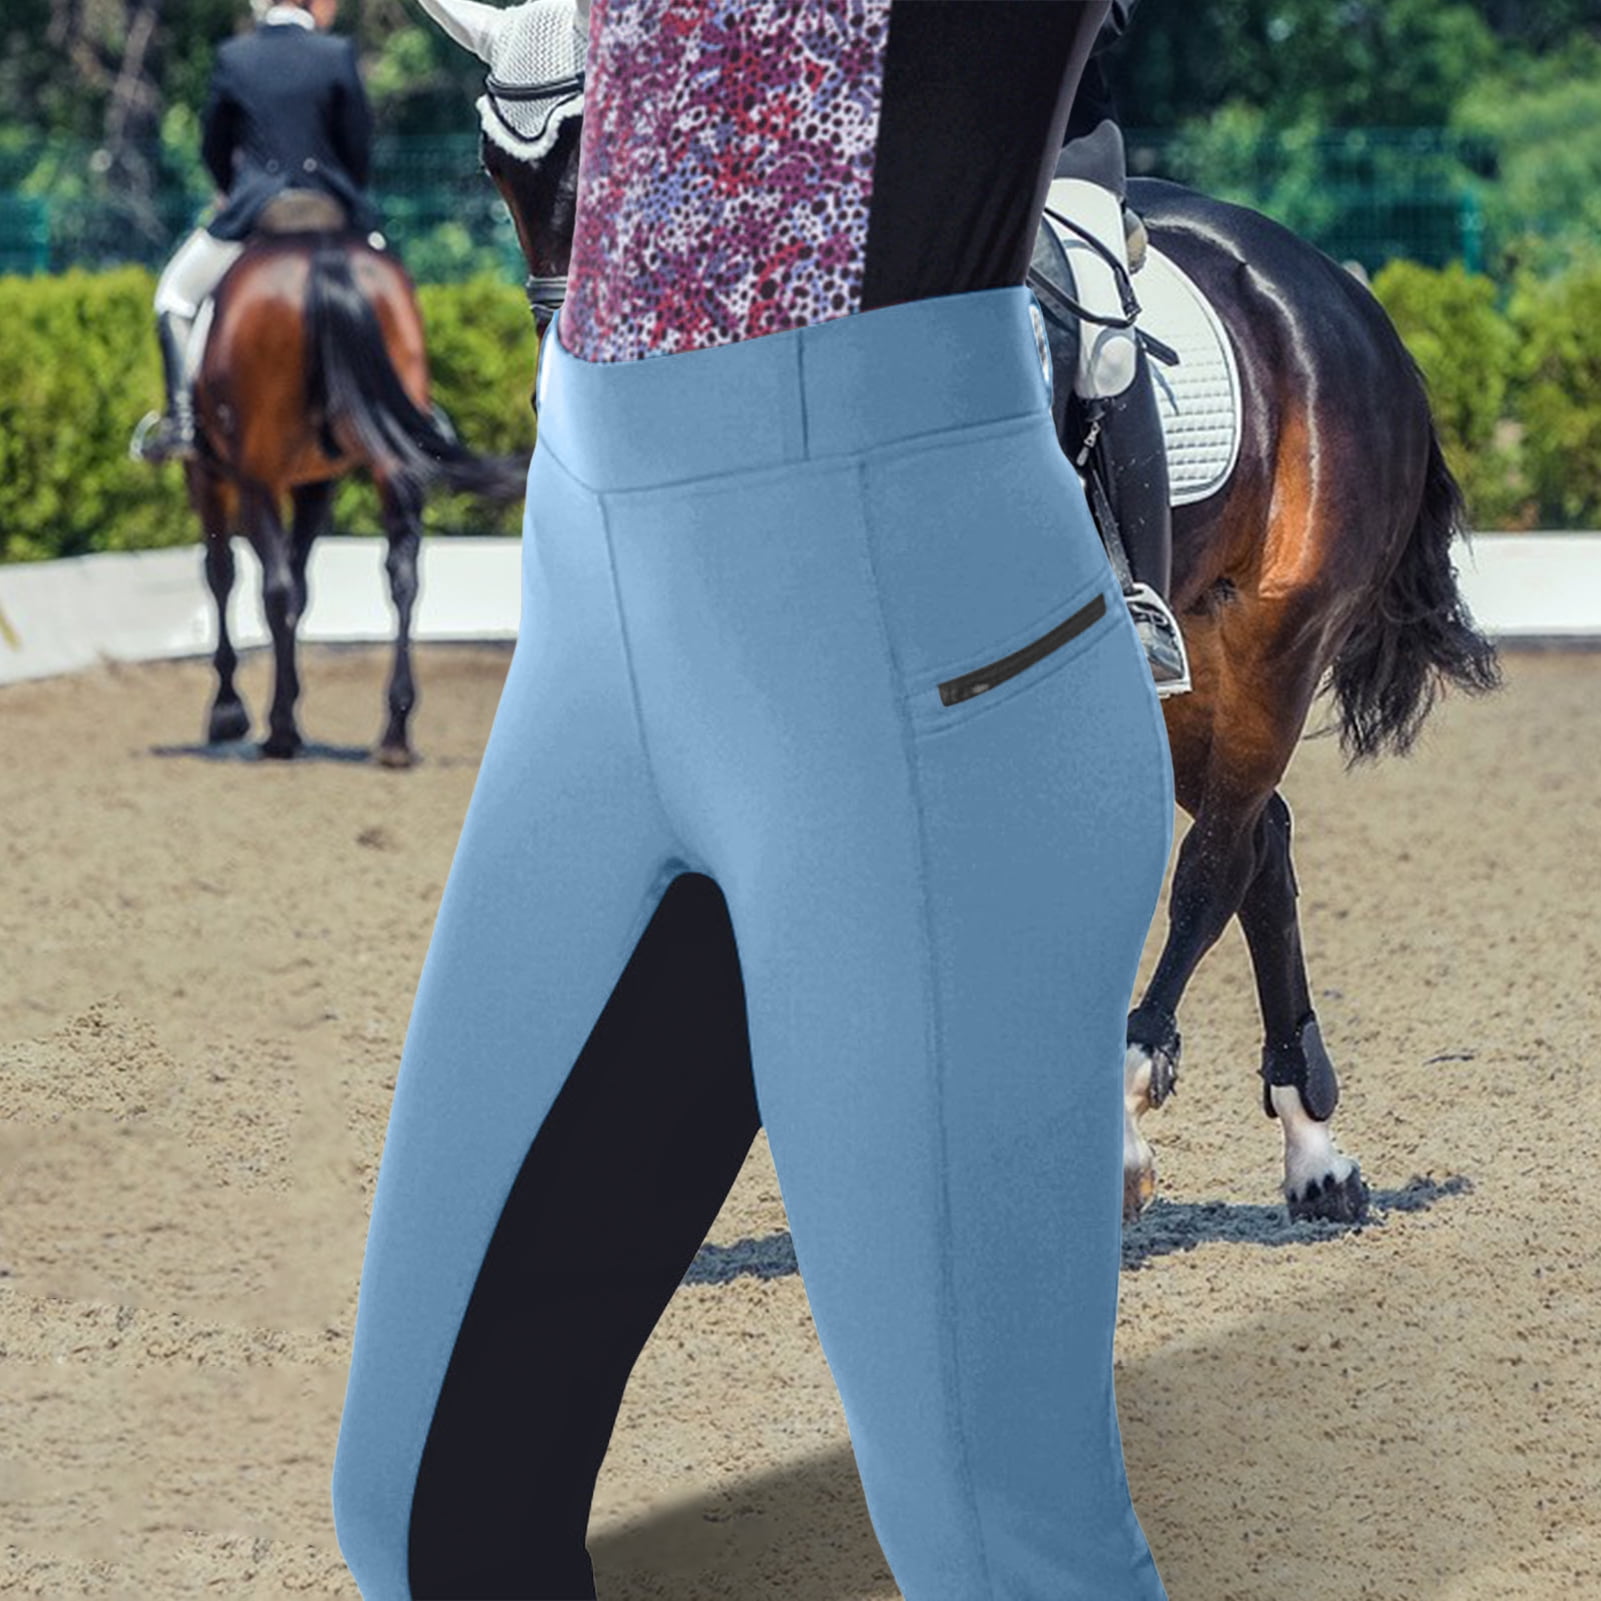 Travelwant Women's Horse Riding Pants Exercise High Waist Breeches